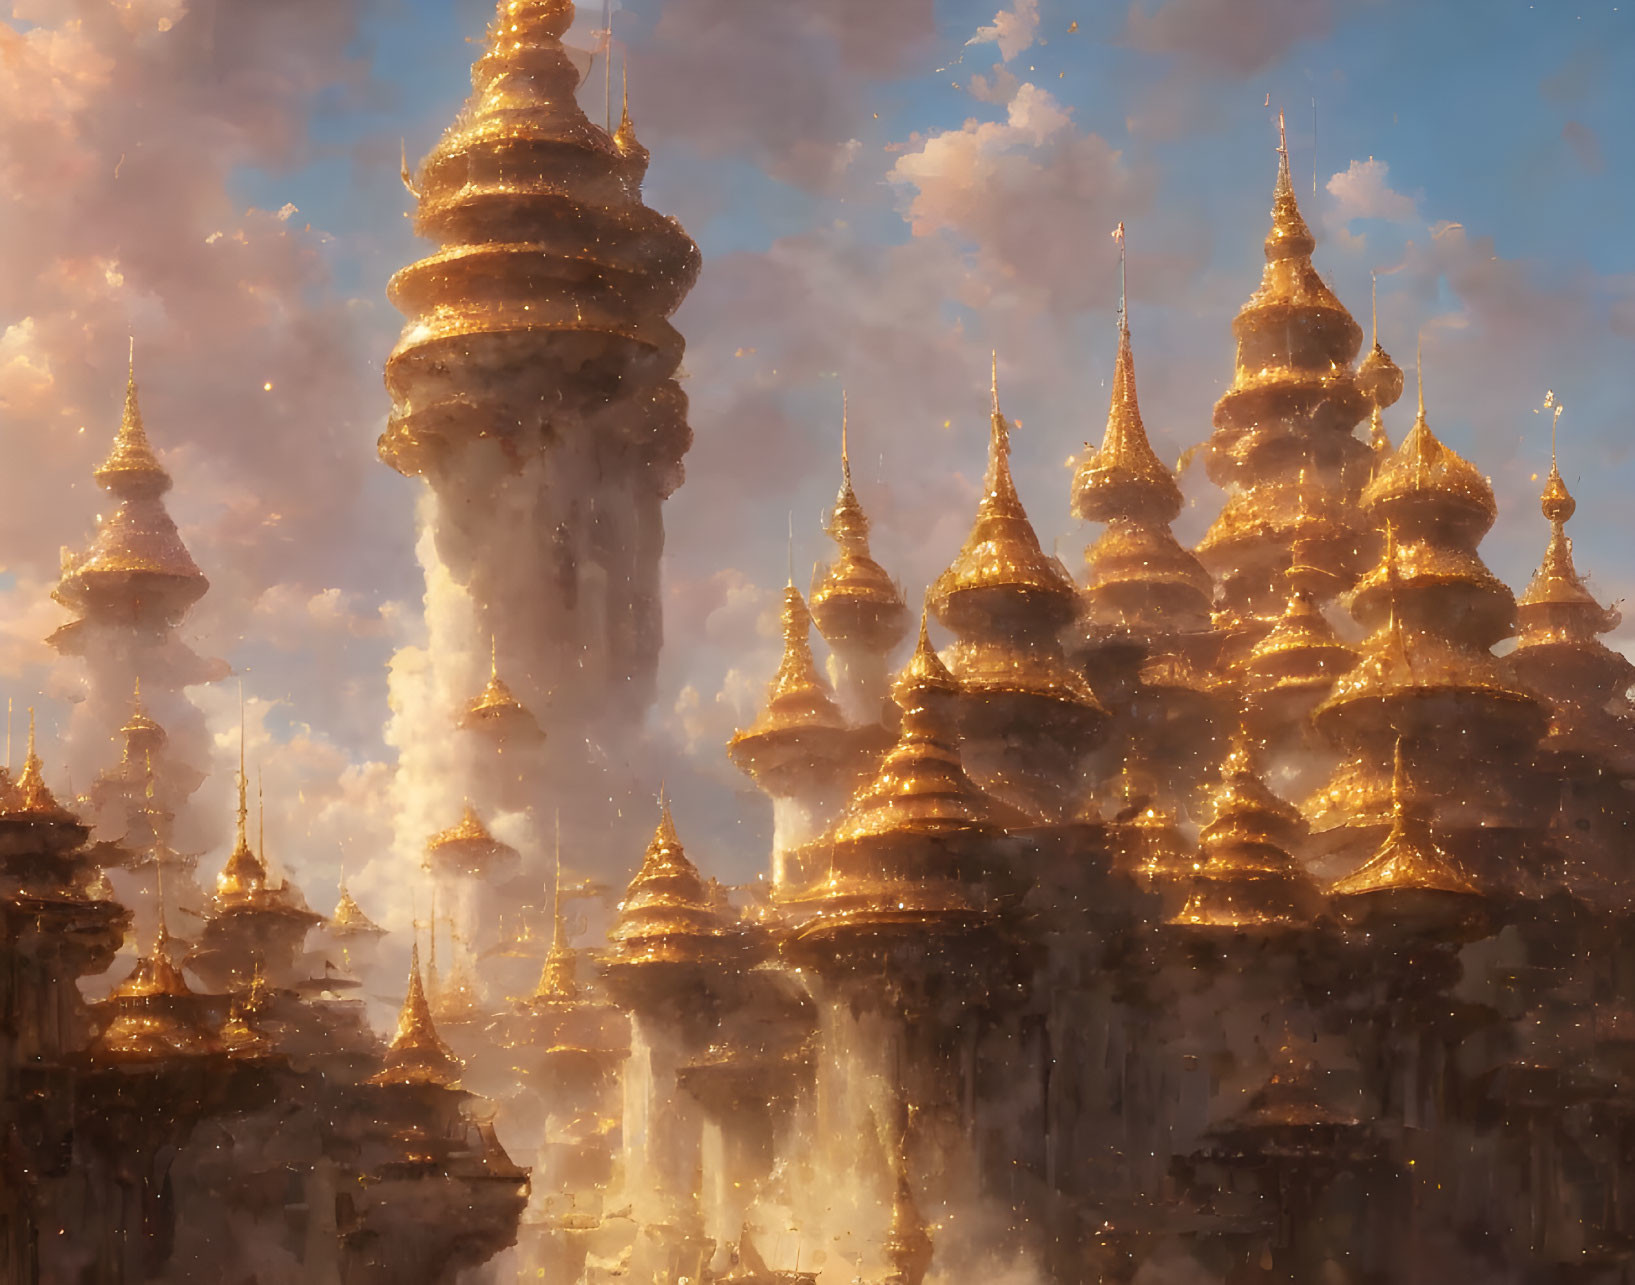 Fantastical city with golden spires under warm, glowing light